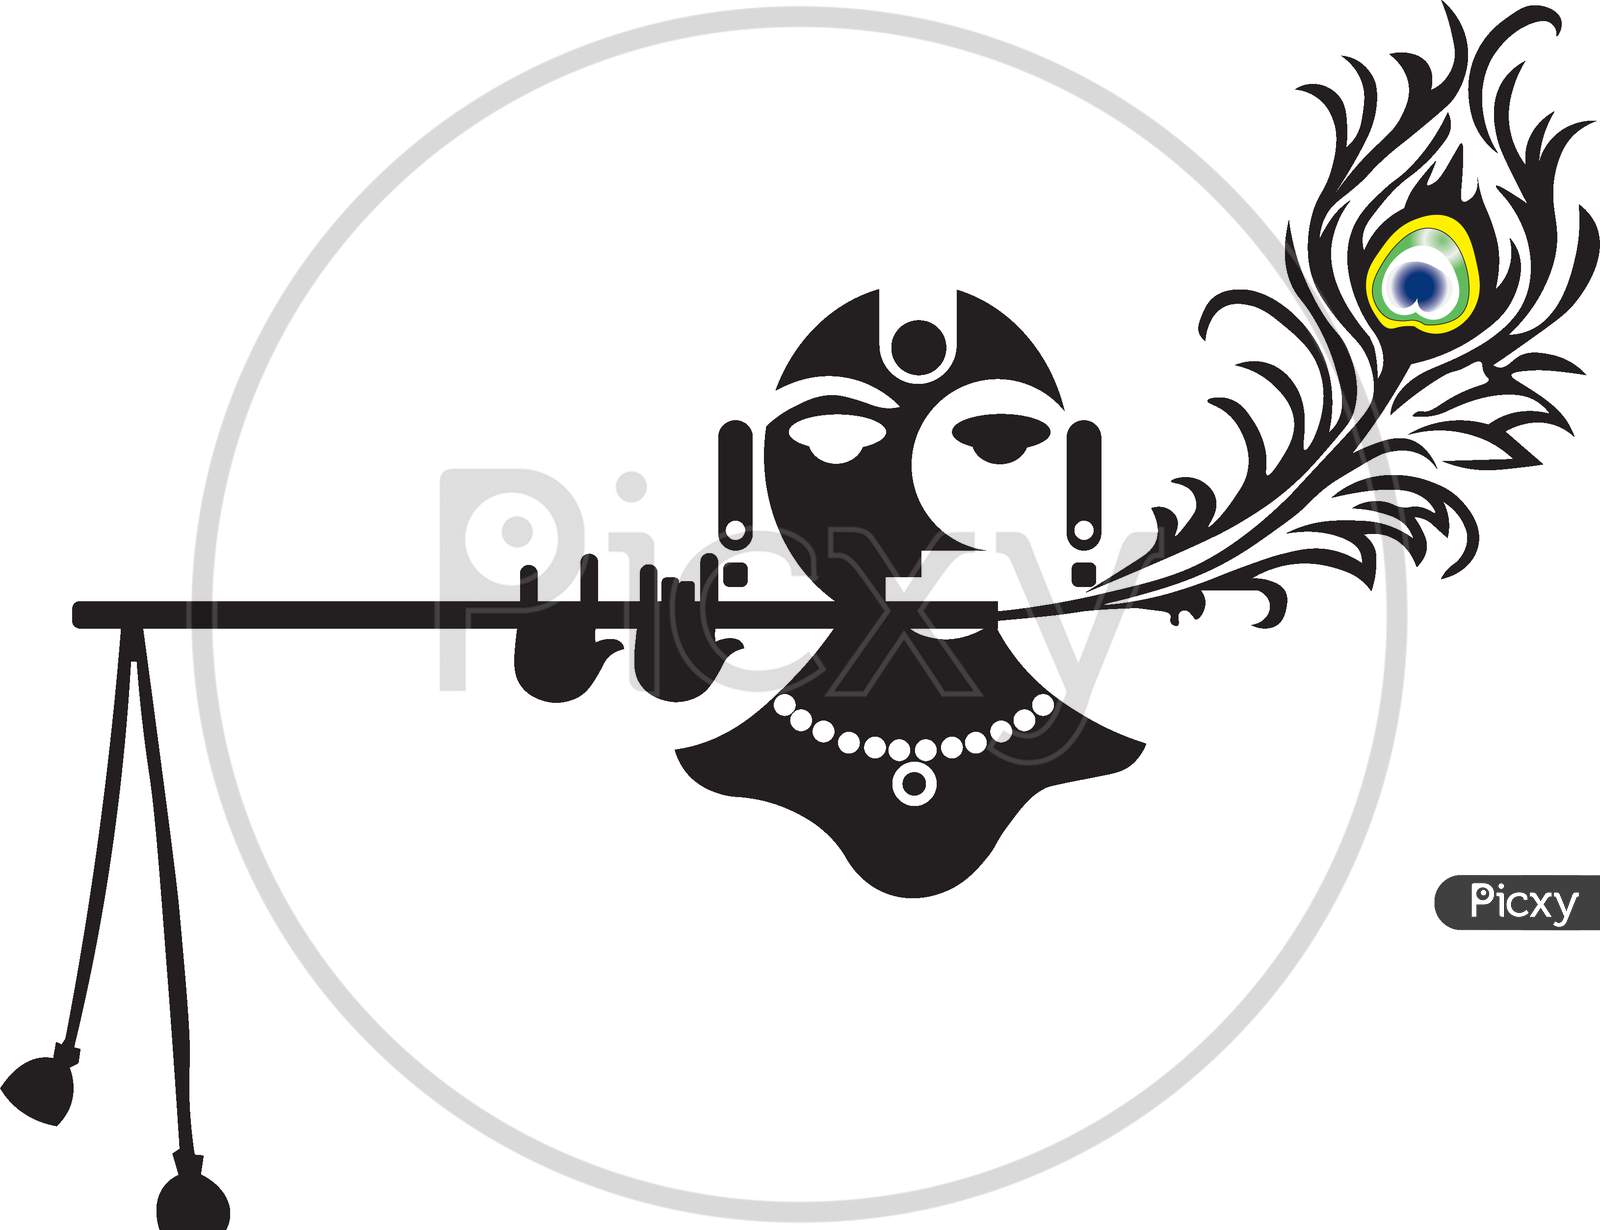 Lord Krishna logo